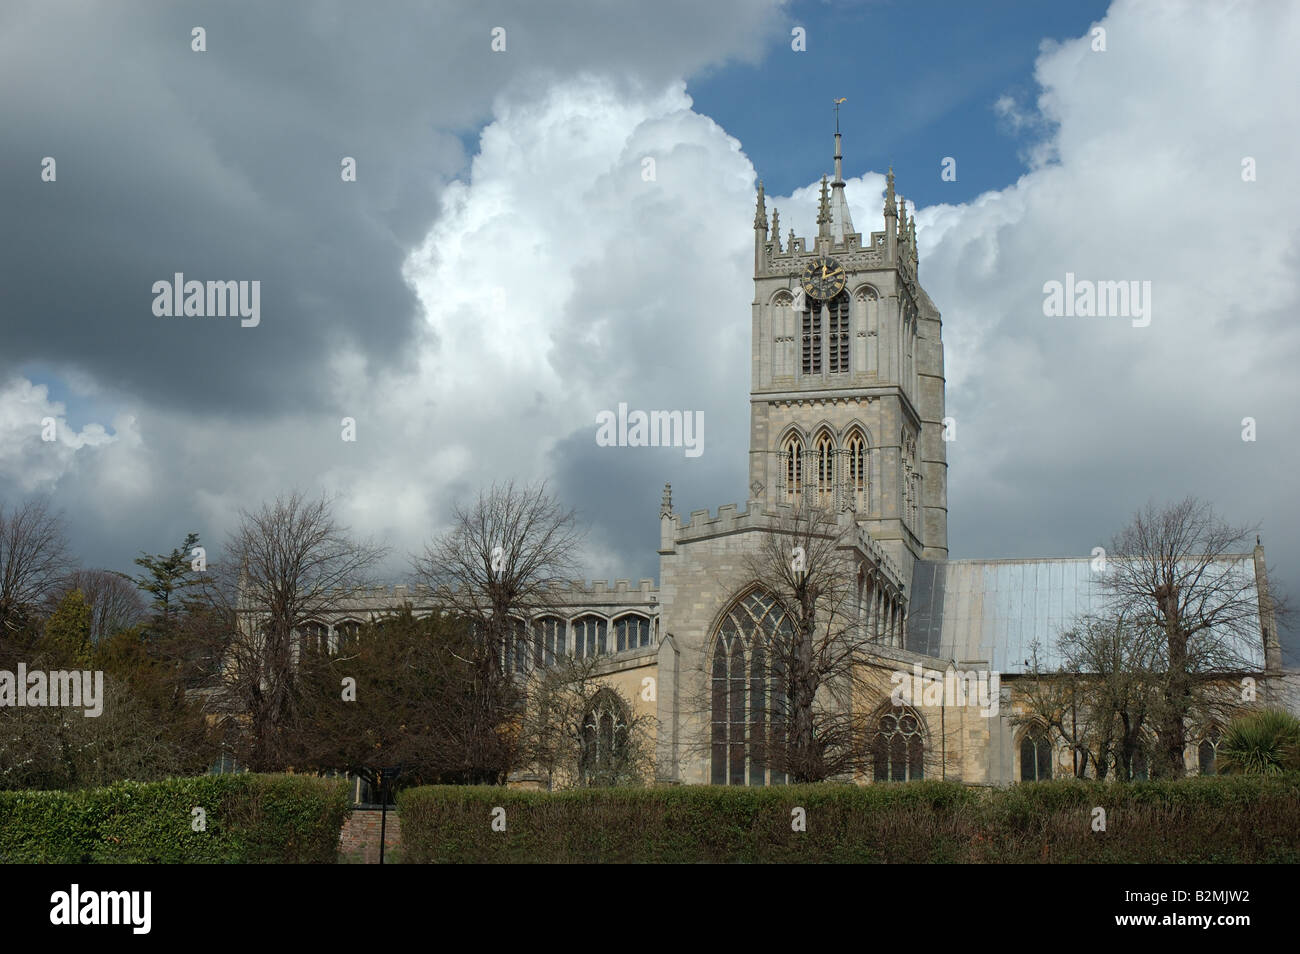 St Marys chiesa, melton mowbray, leicestershire, England, Regno Unito Foto Stock